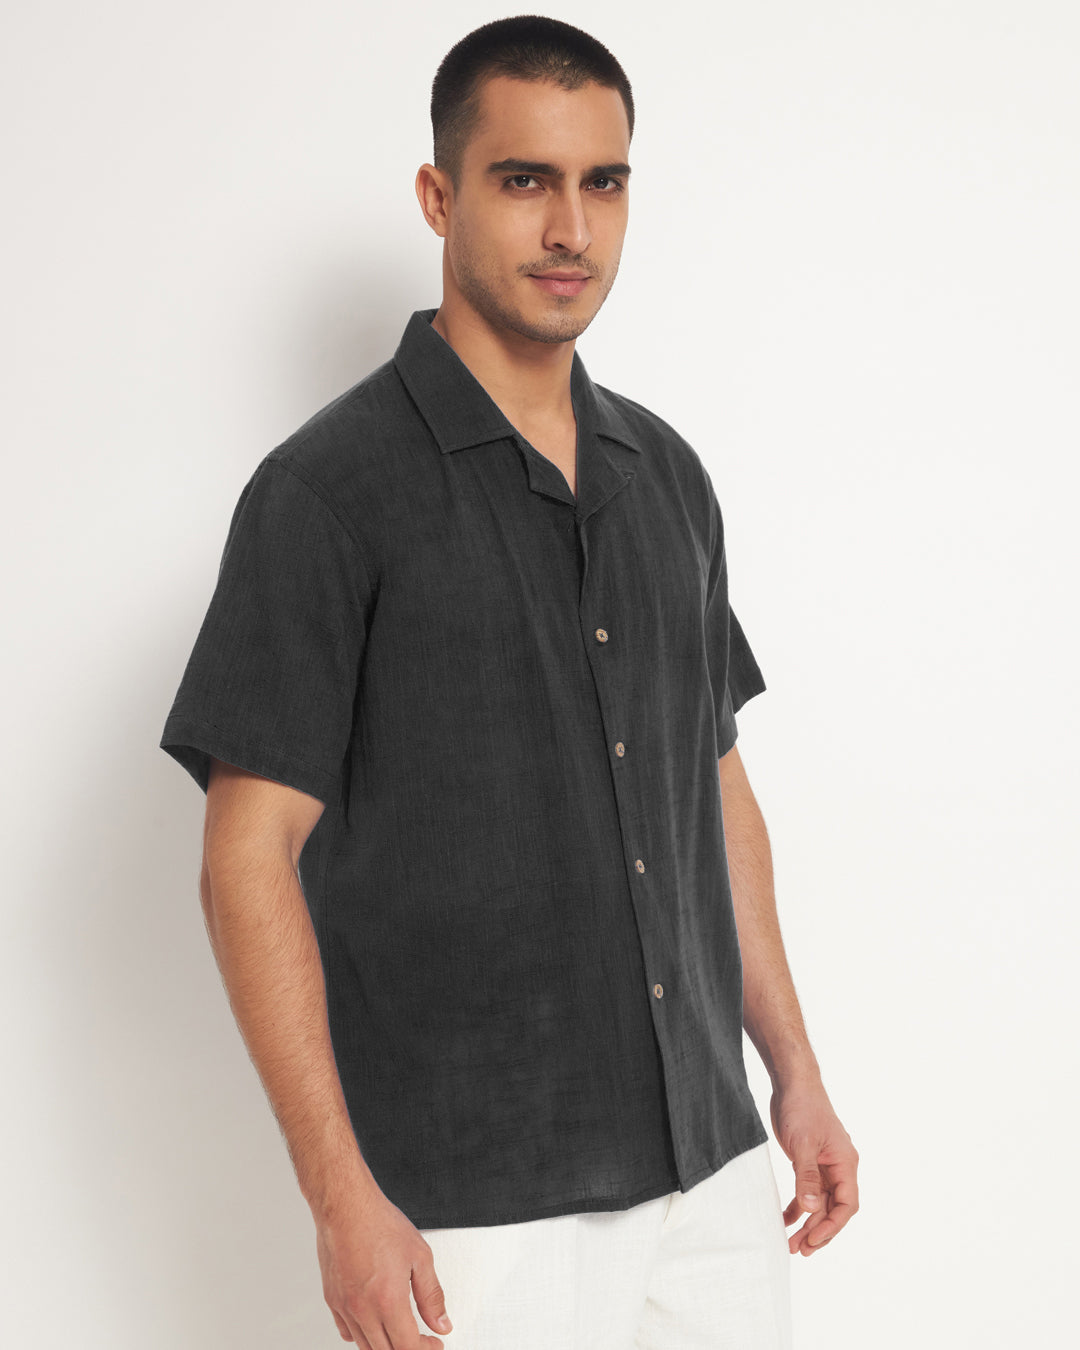 Combo : Classic Blush & Black Men's Half Sleeves Shirt